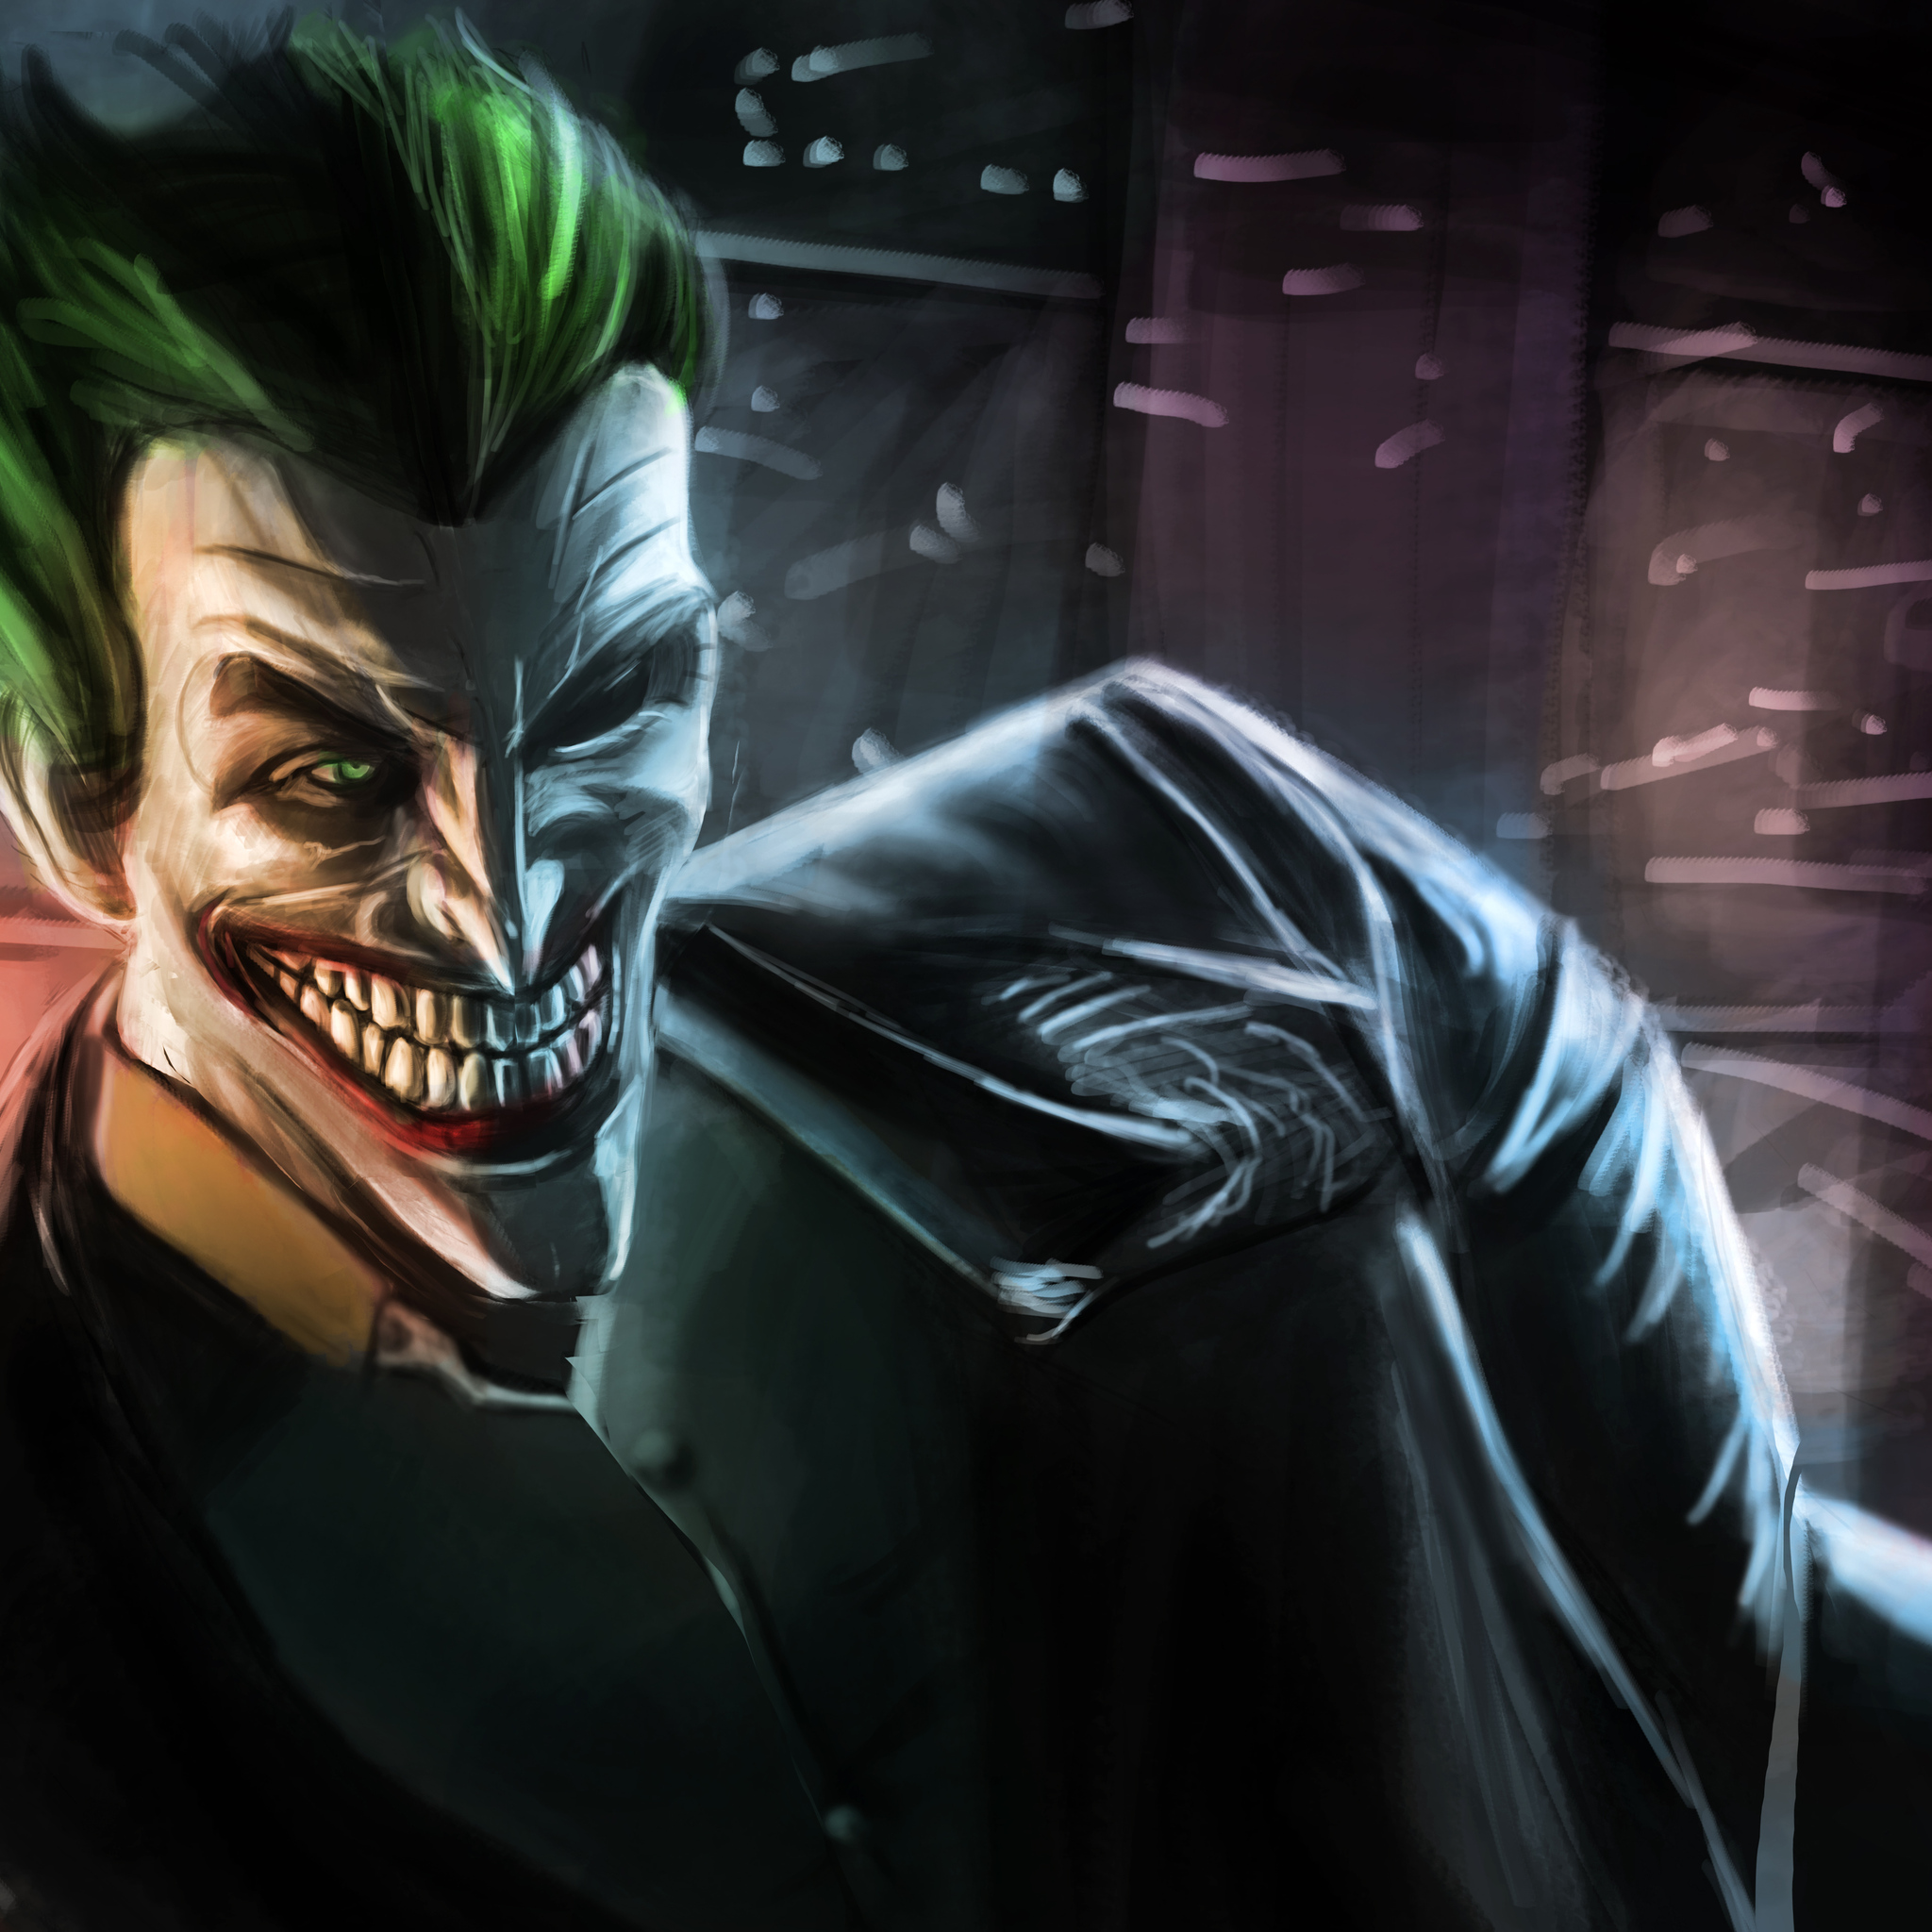 Joker Arkham Origins In 2048x2048 Resolution. joker-arkham-origins-it.jpg. 